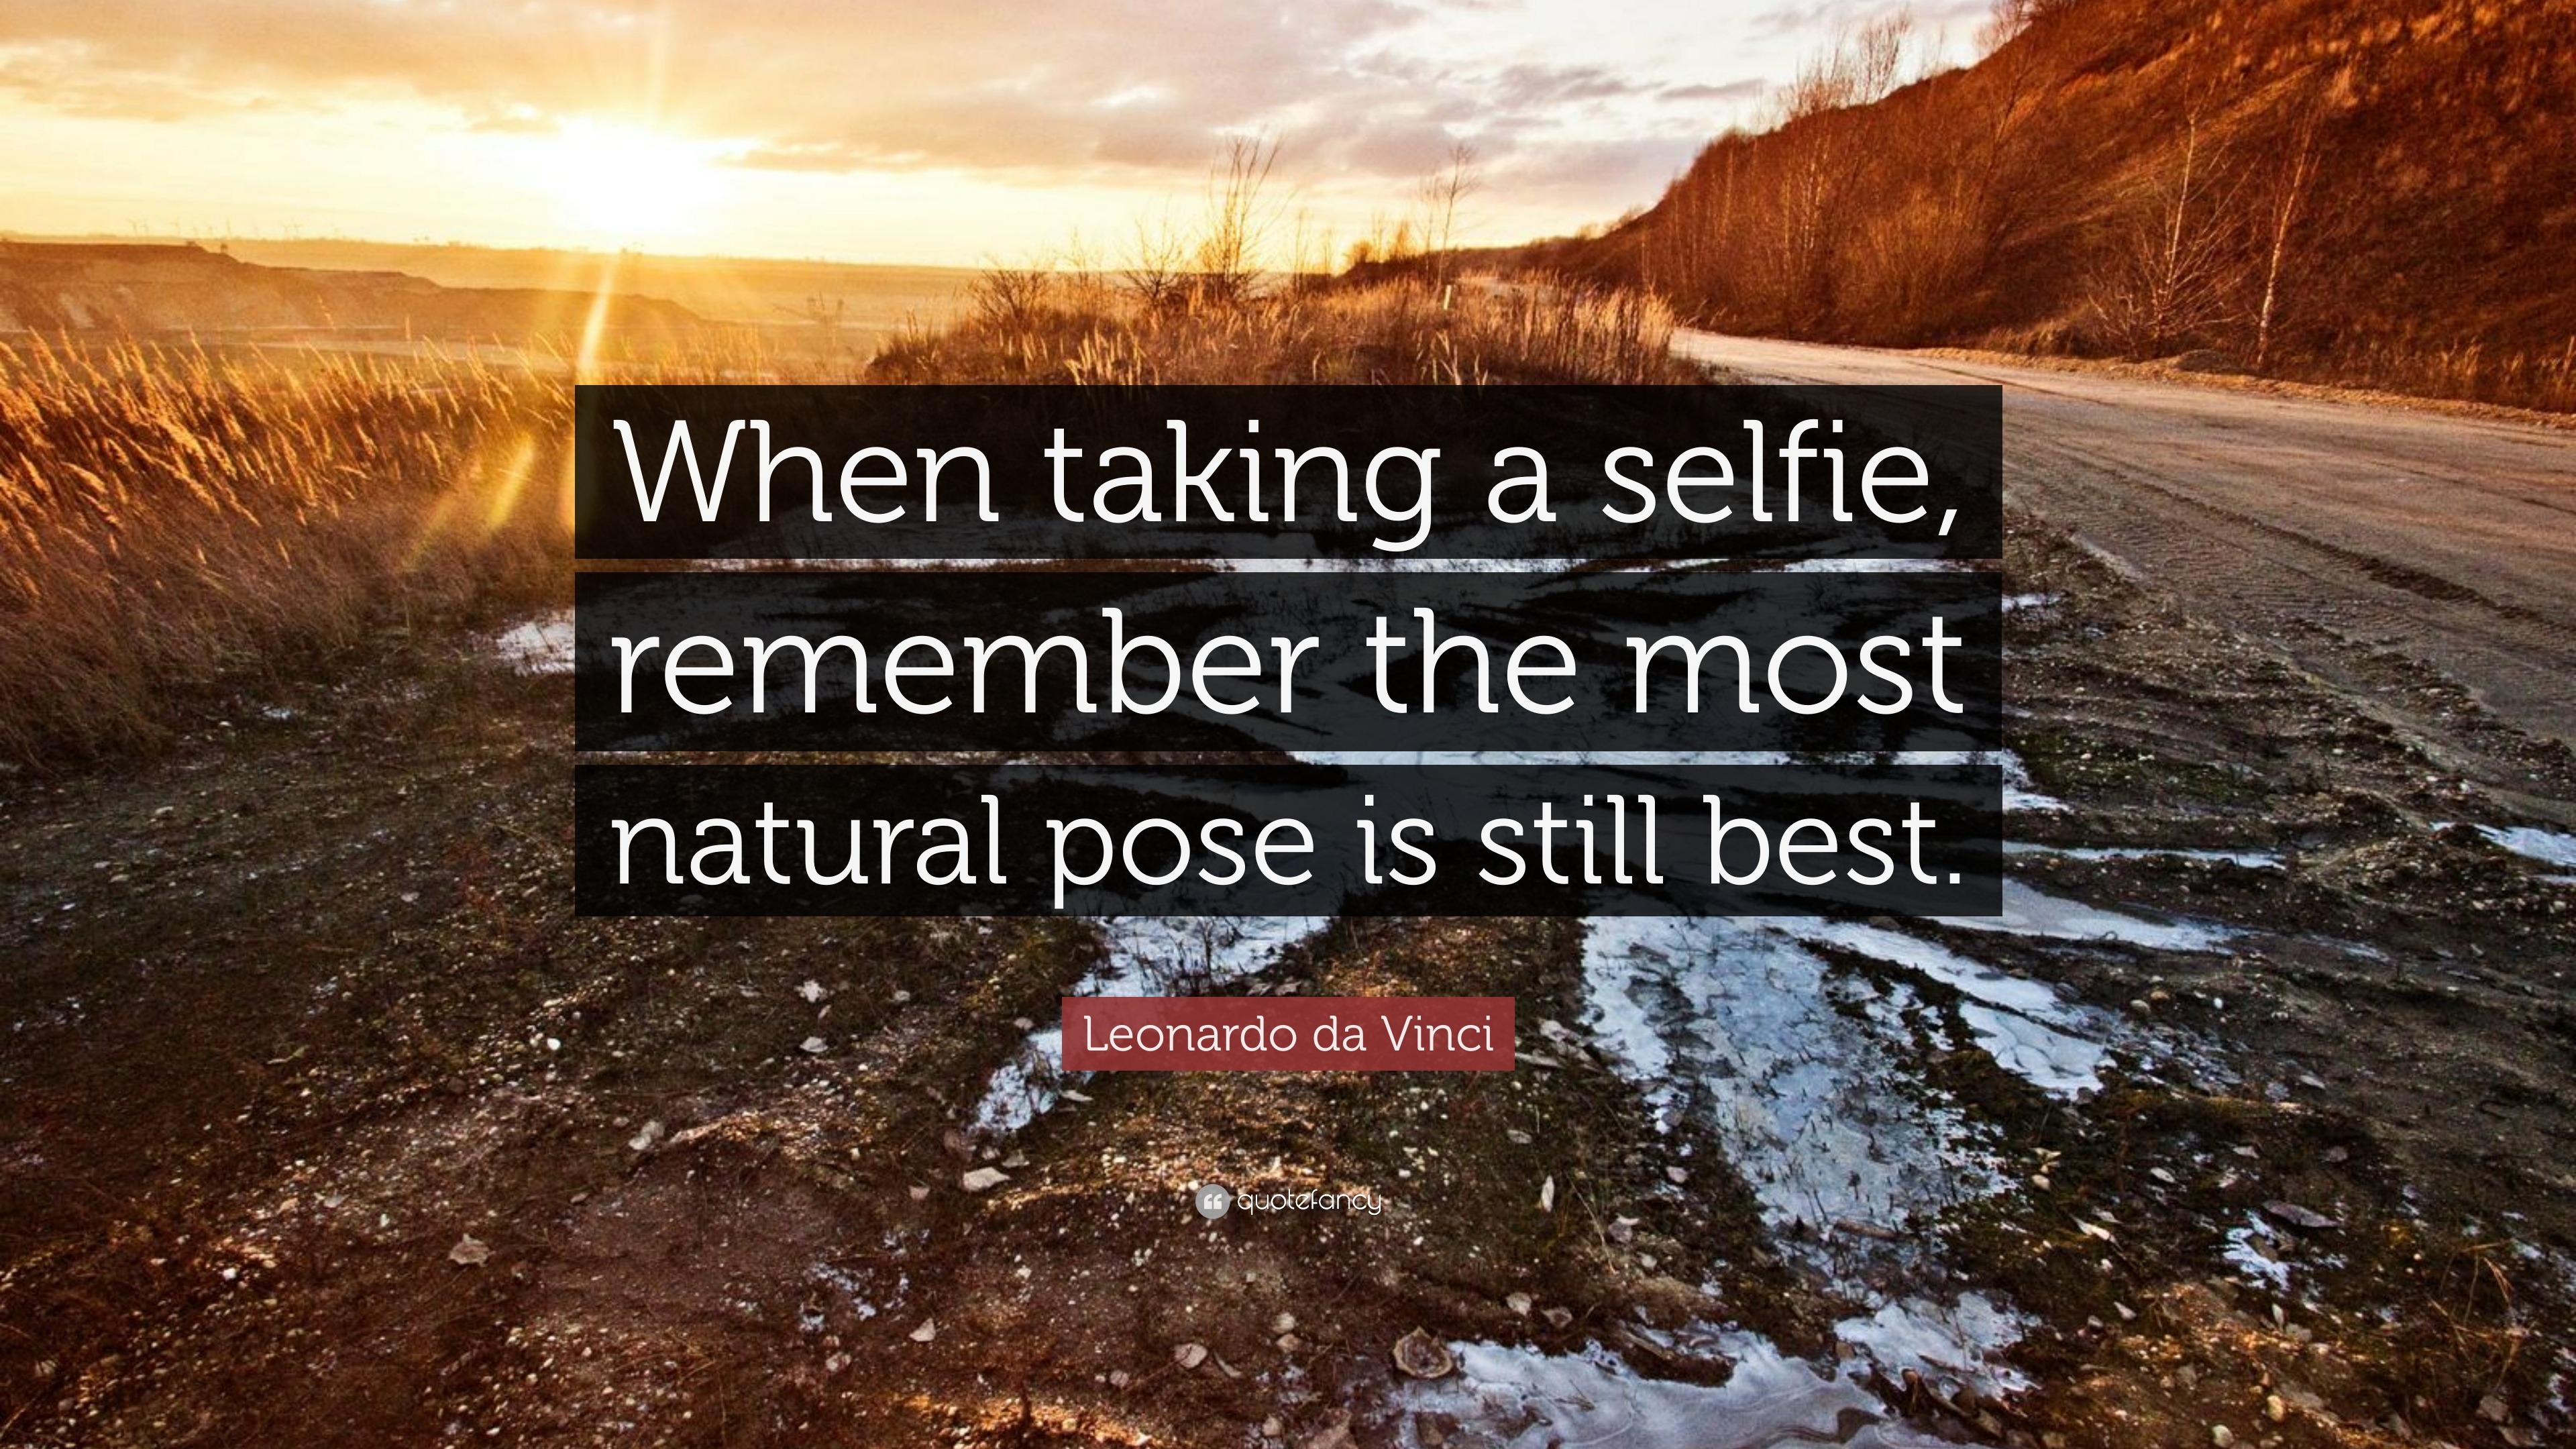 Mirror Selfie: Captions for Instagram Pictures